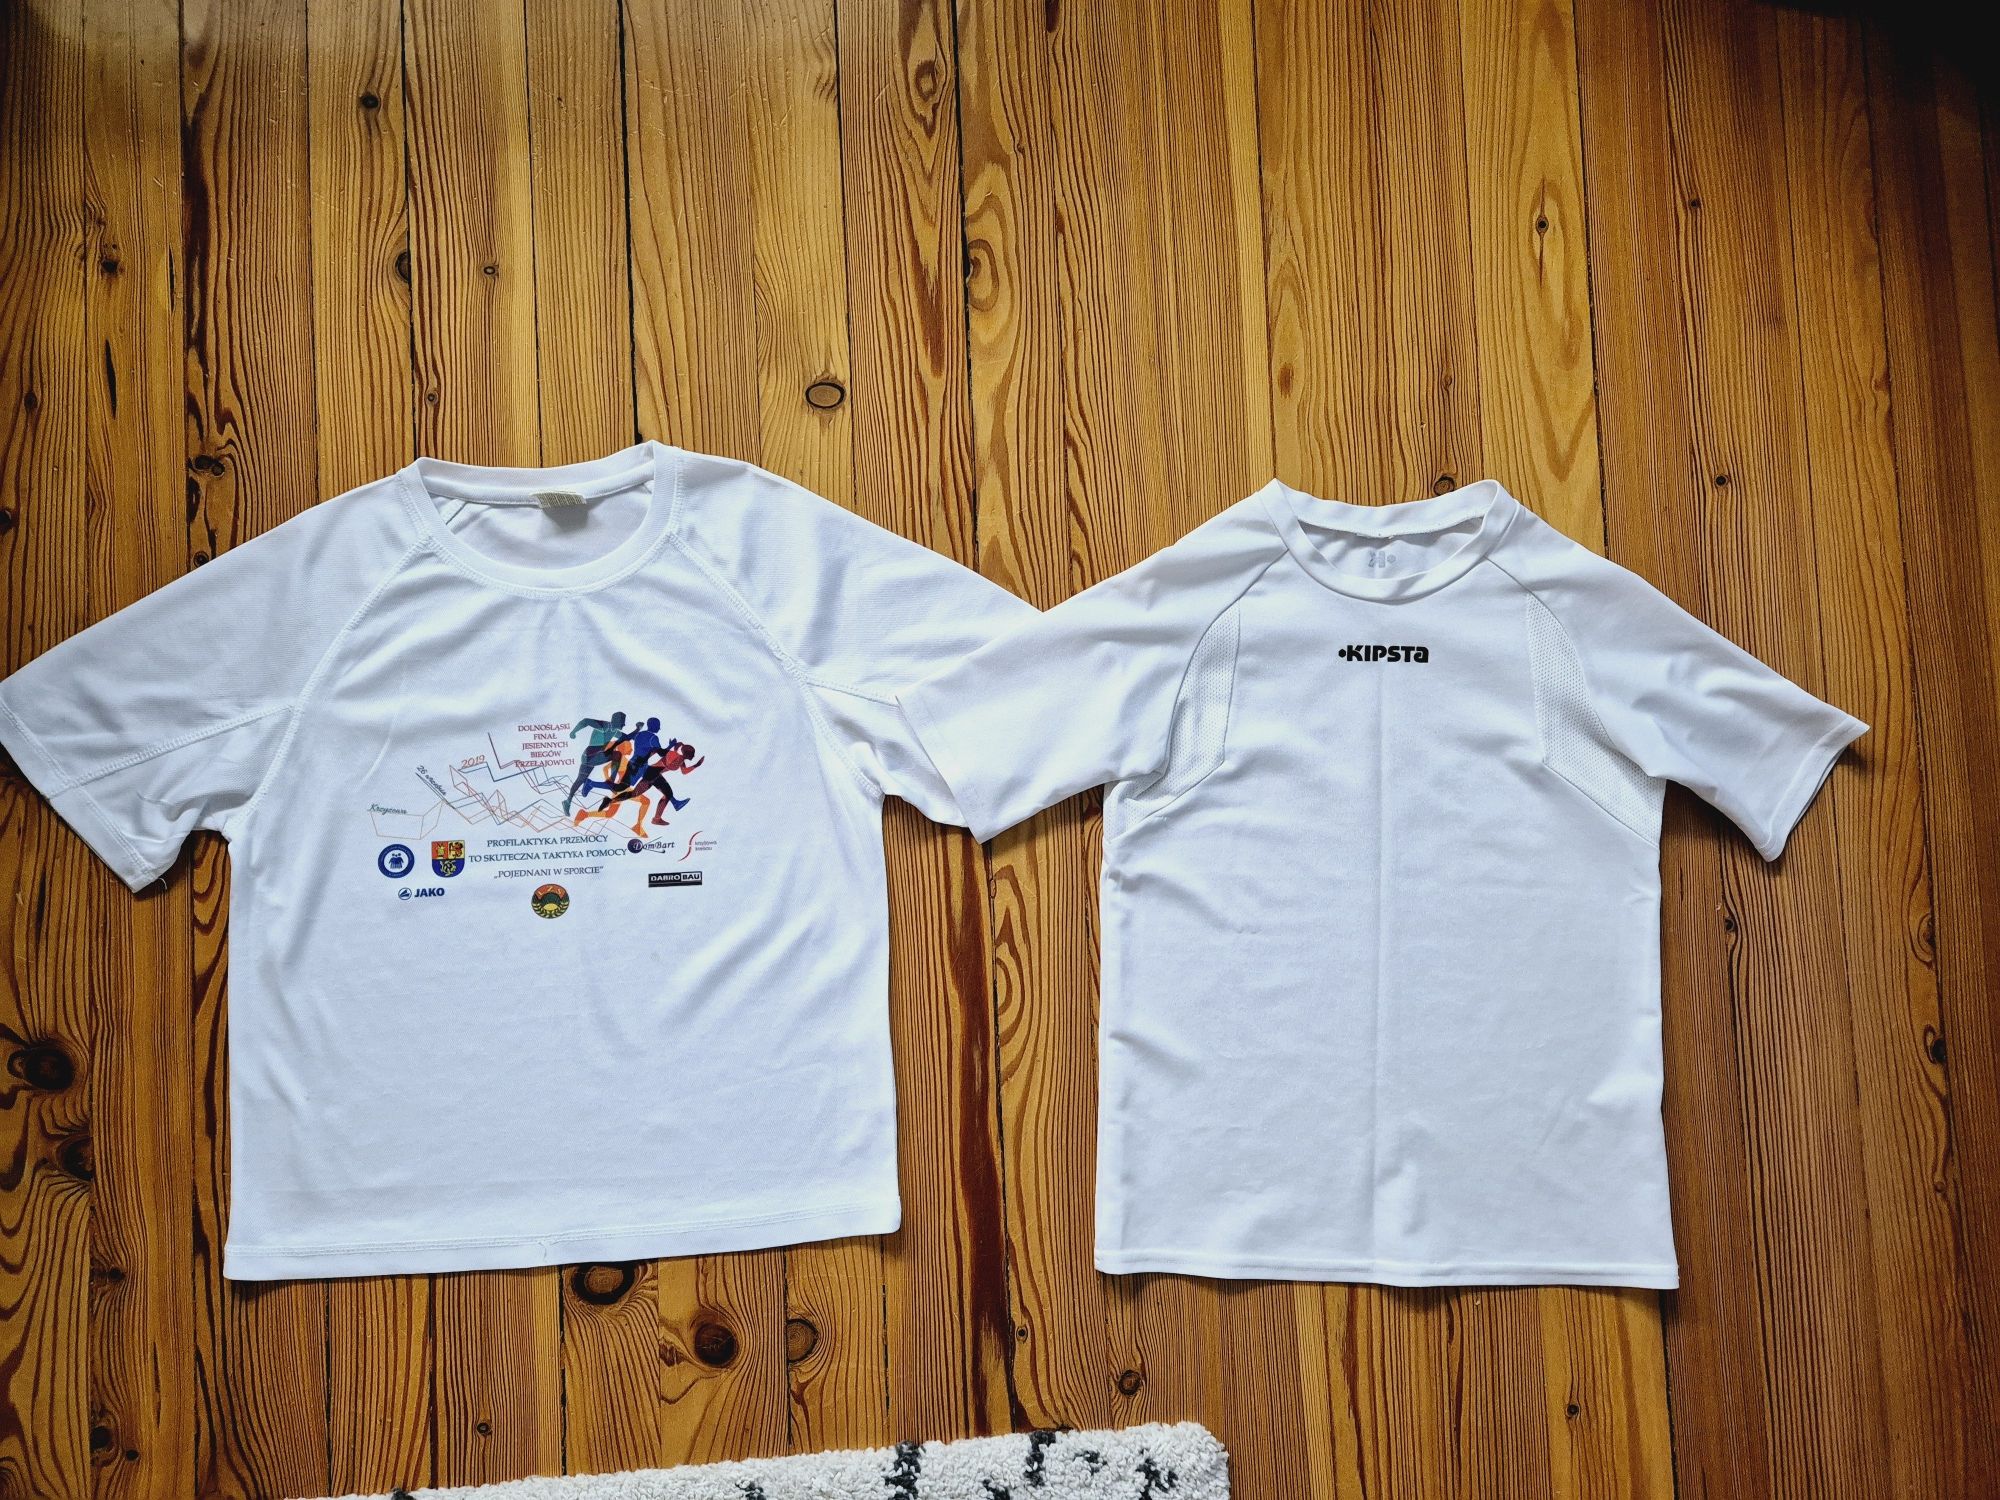 Paka ubrań 134 koszulka na wf kąpielówki spodenki bluzka Tshirt Kipsta